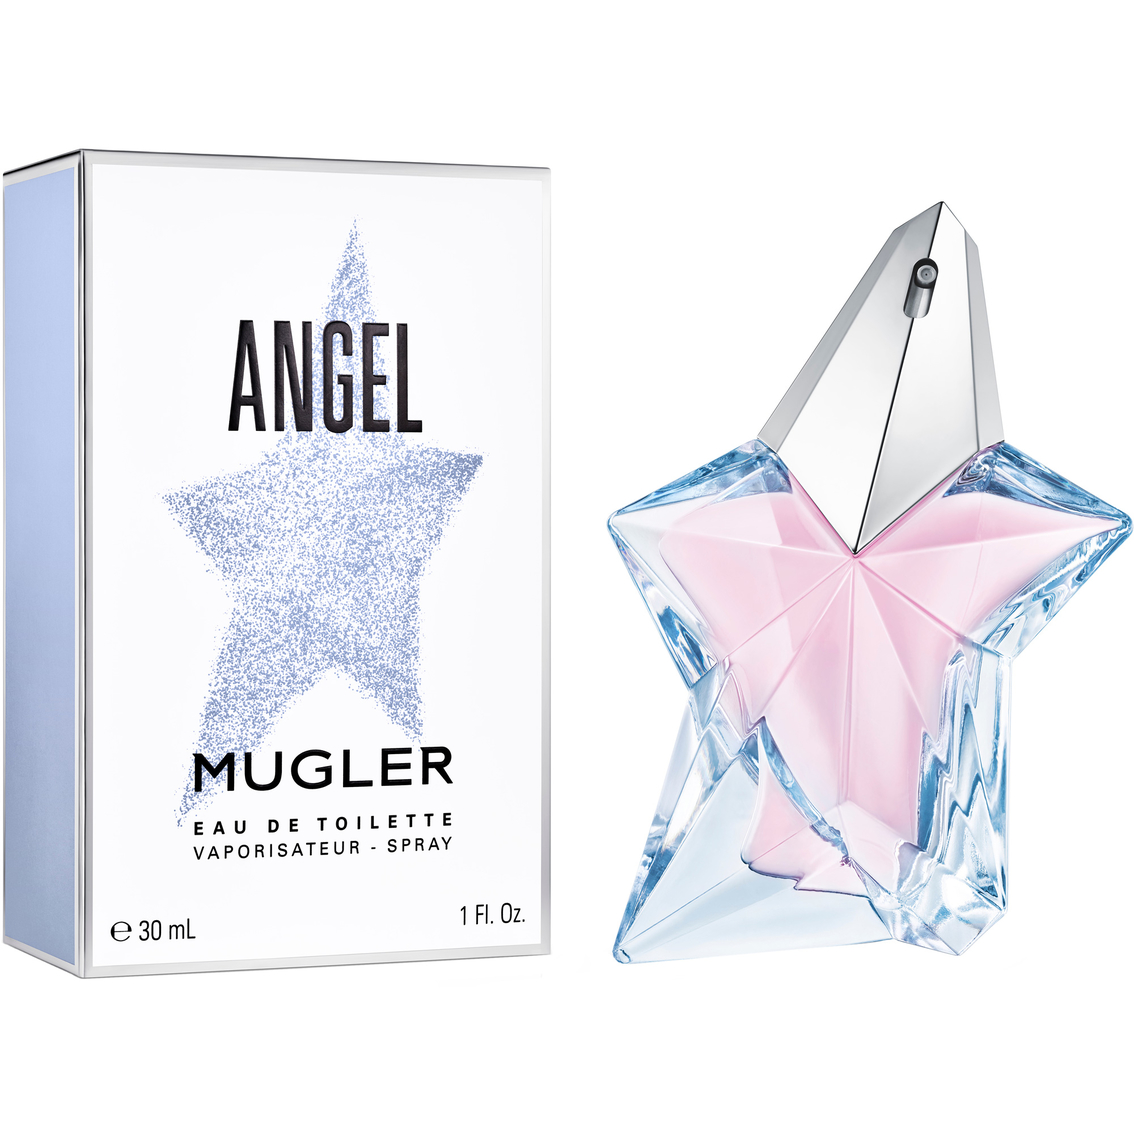 Thierry Mugler Angel Eau de Toilette - Image 2 of 2